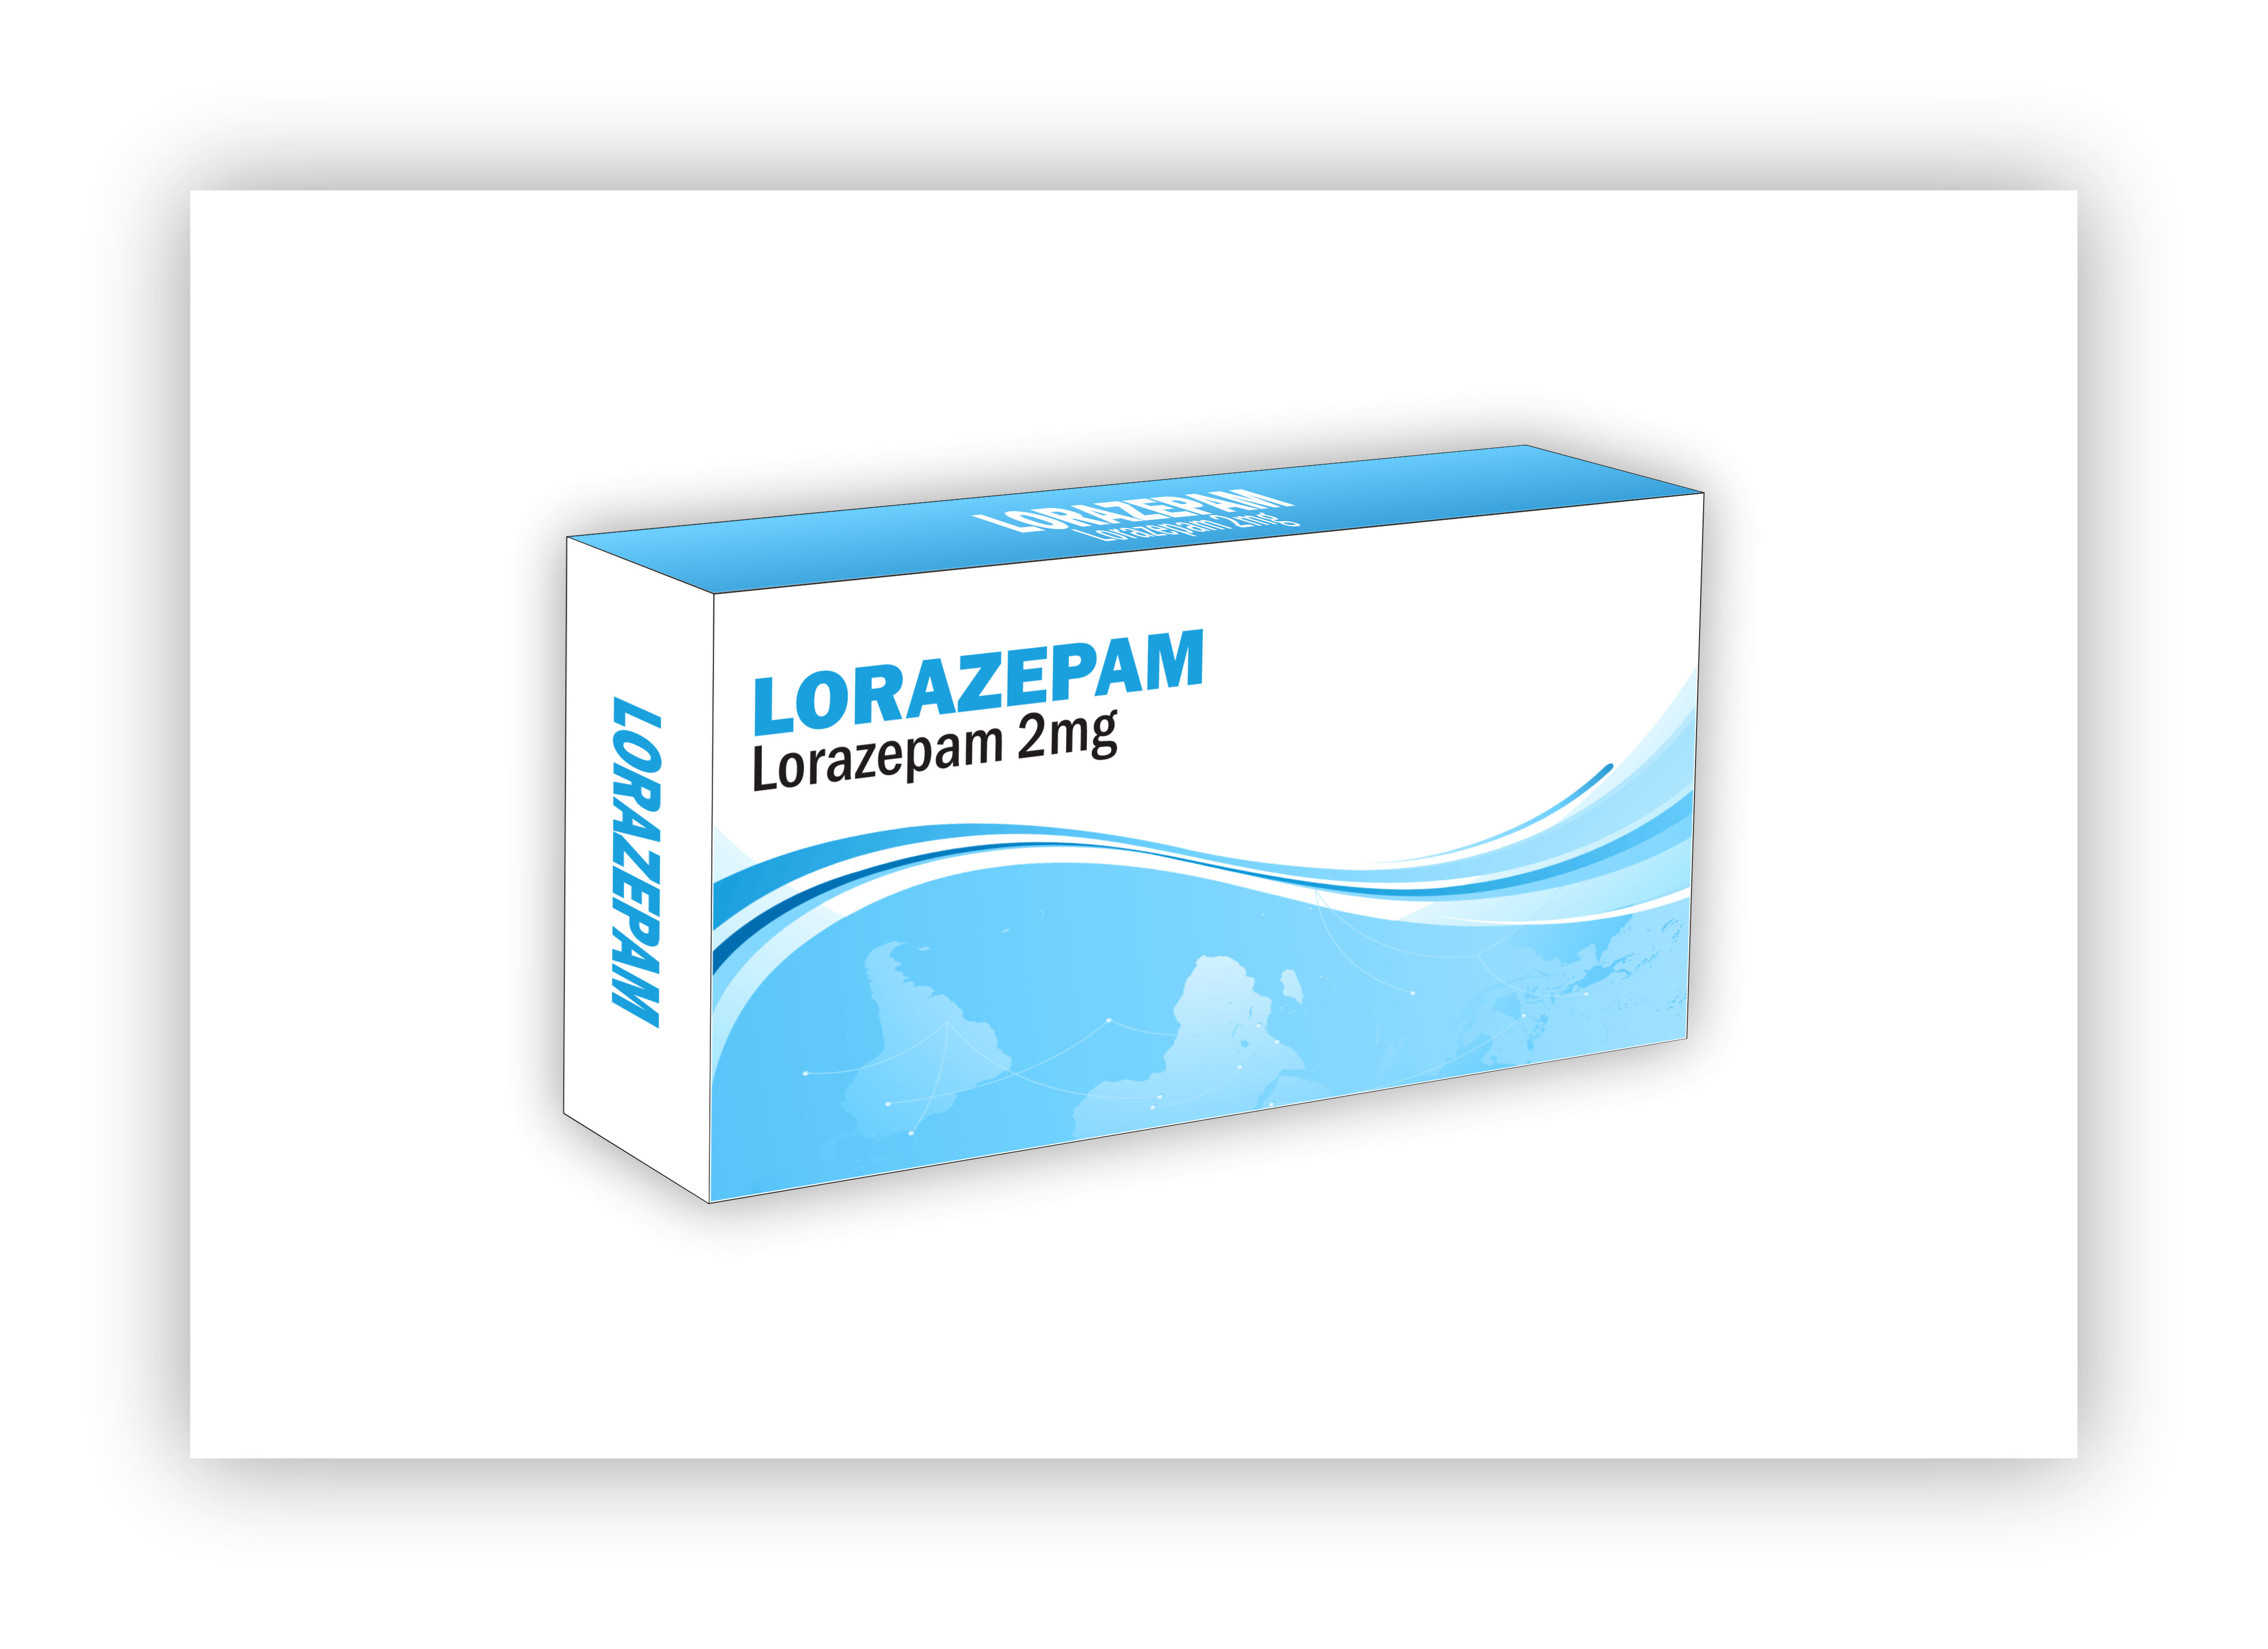 Lorazepam 2mg